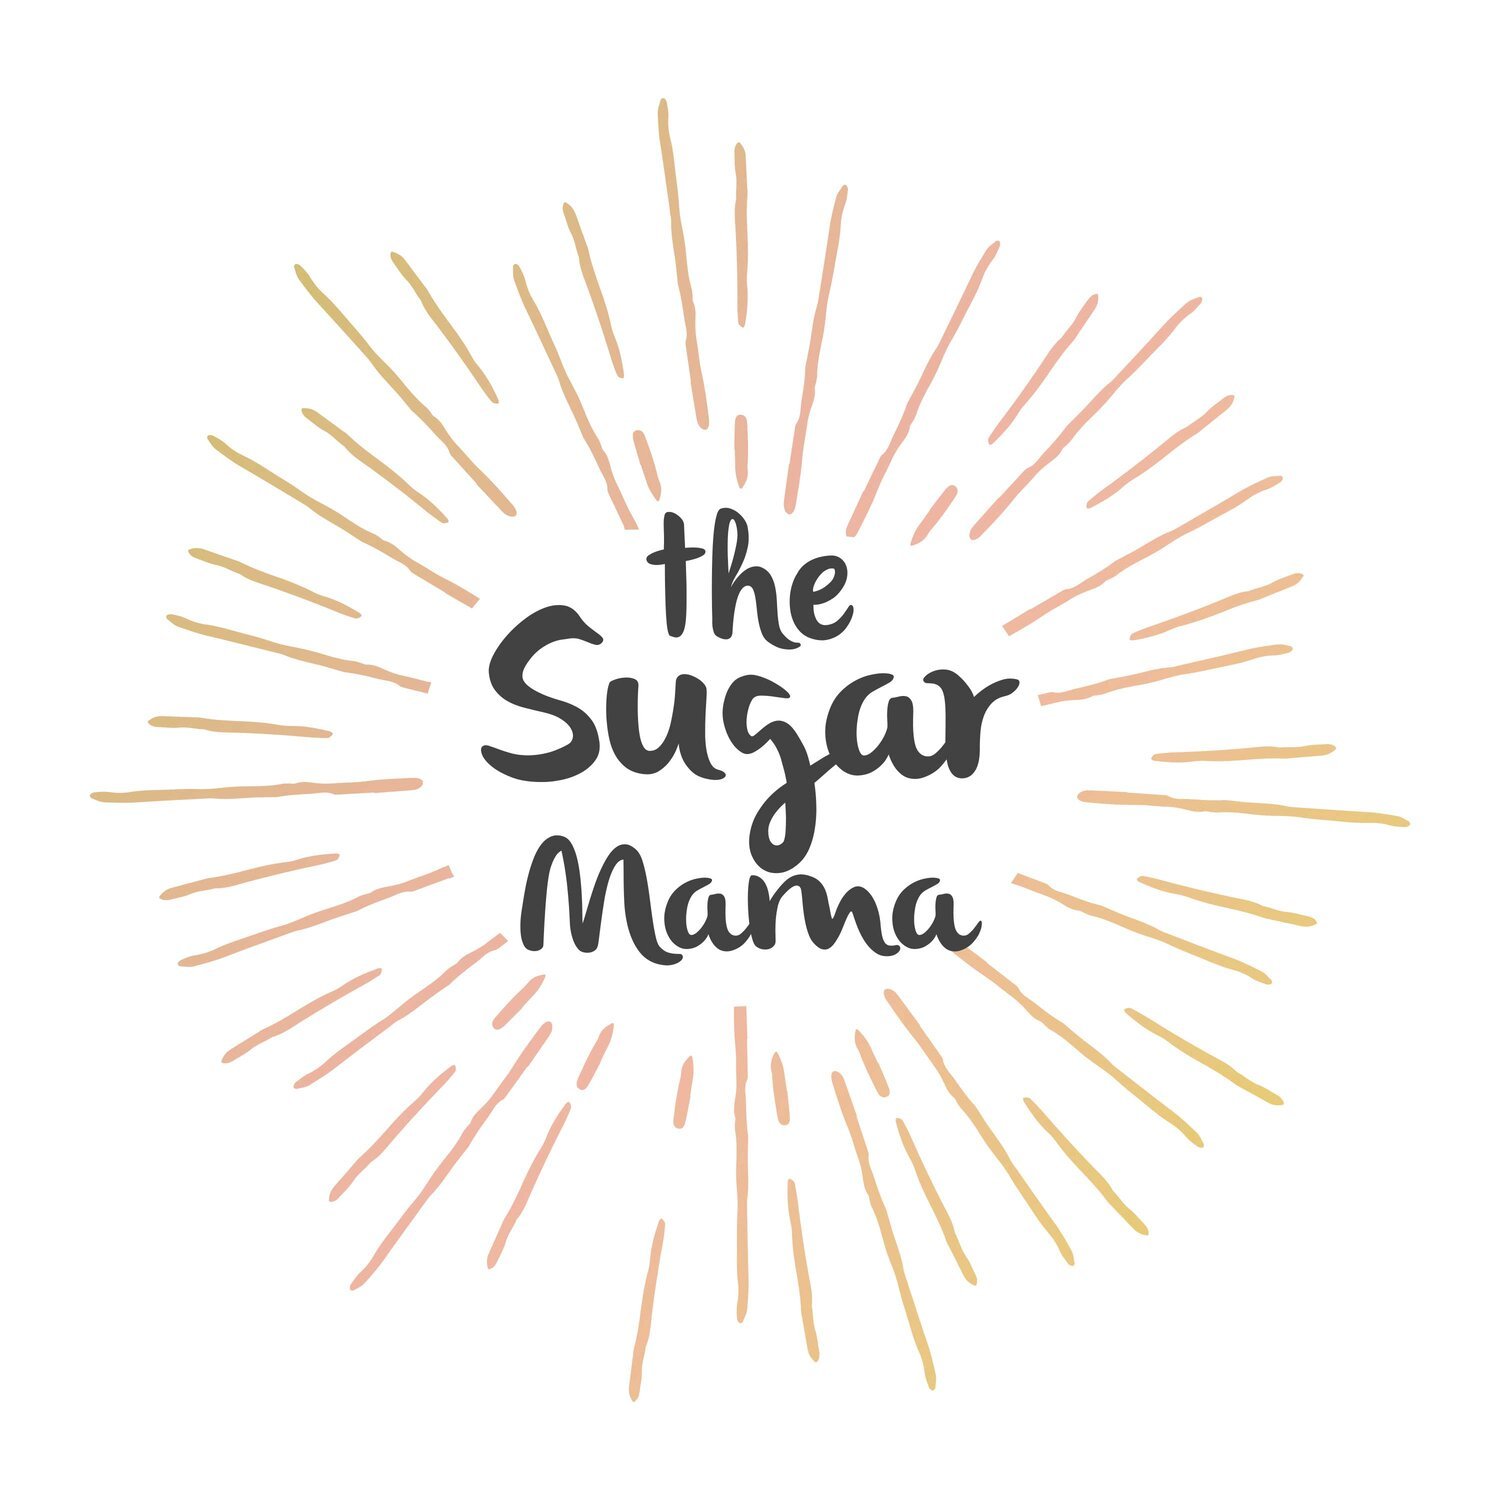 The Sugar Mama